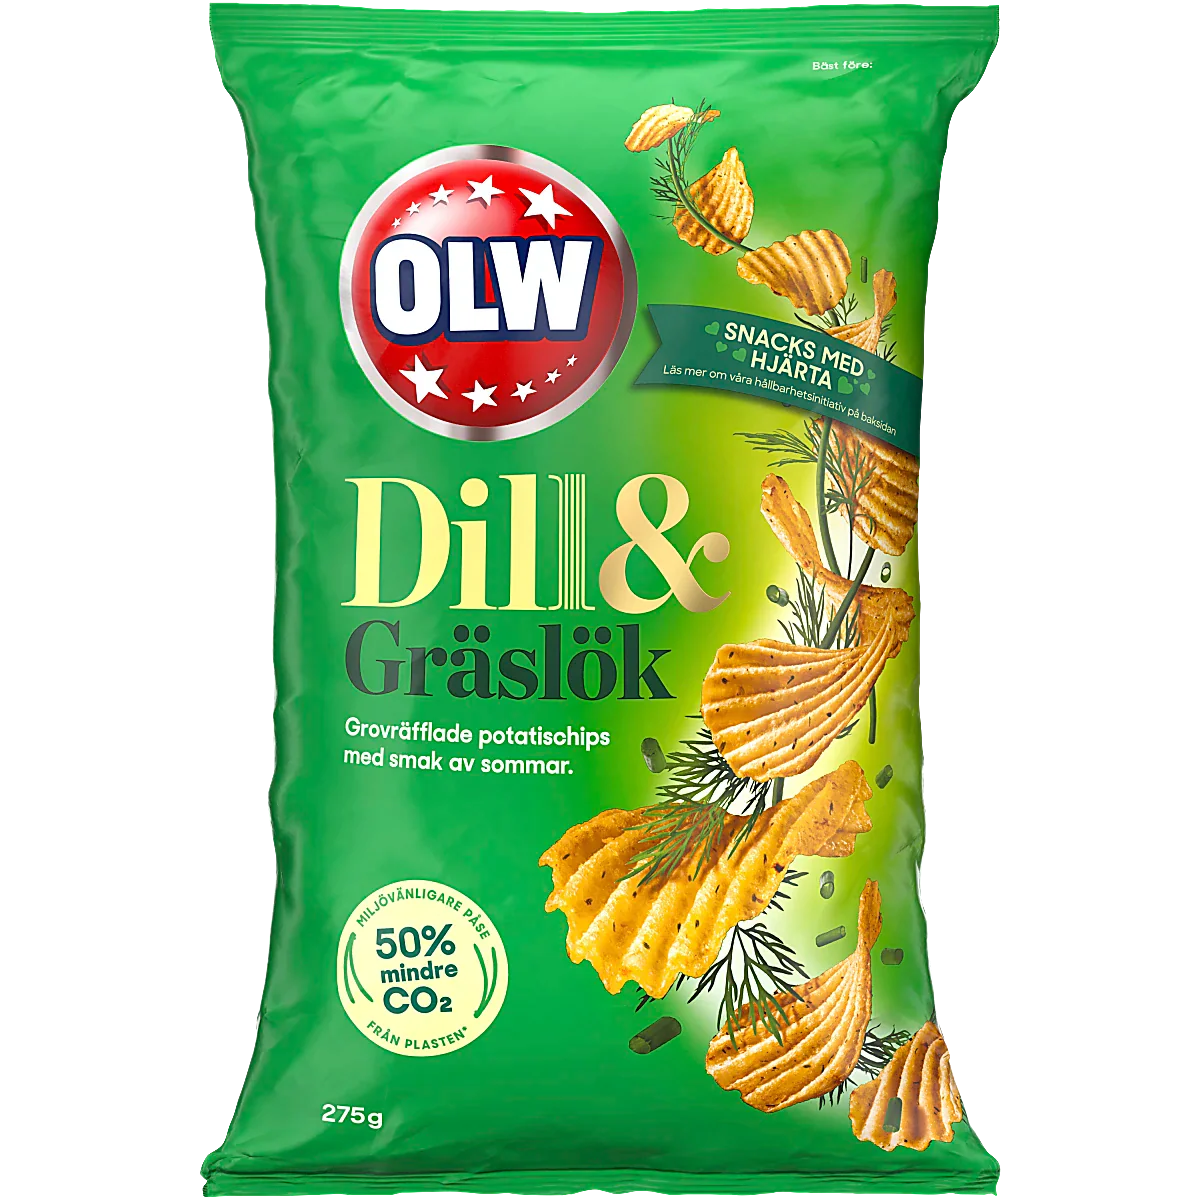 OLW Dill- und Schnittlauchchips by Swedish Candy Store